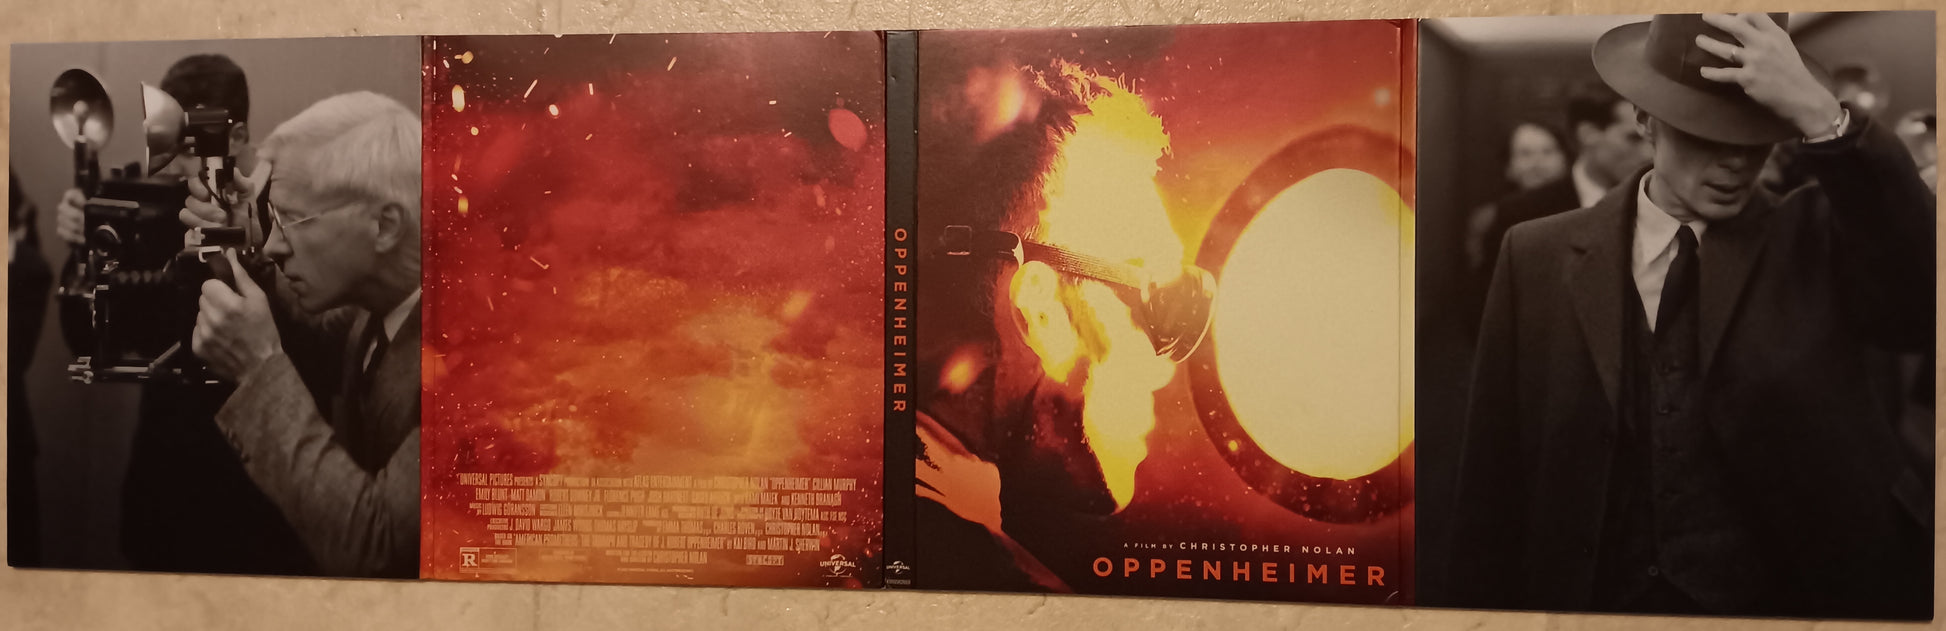 OPPENHEIMER Blu-ray + DVD + Digital Code with Slipcover - Helia Beer Co